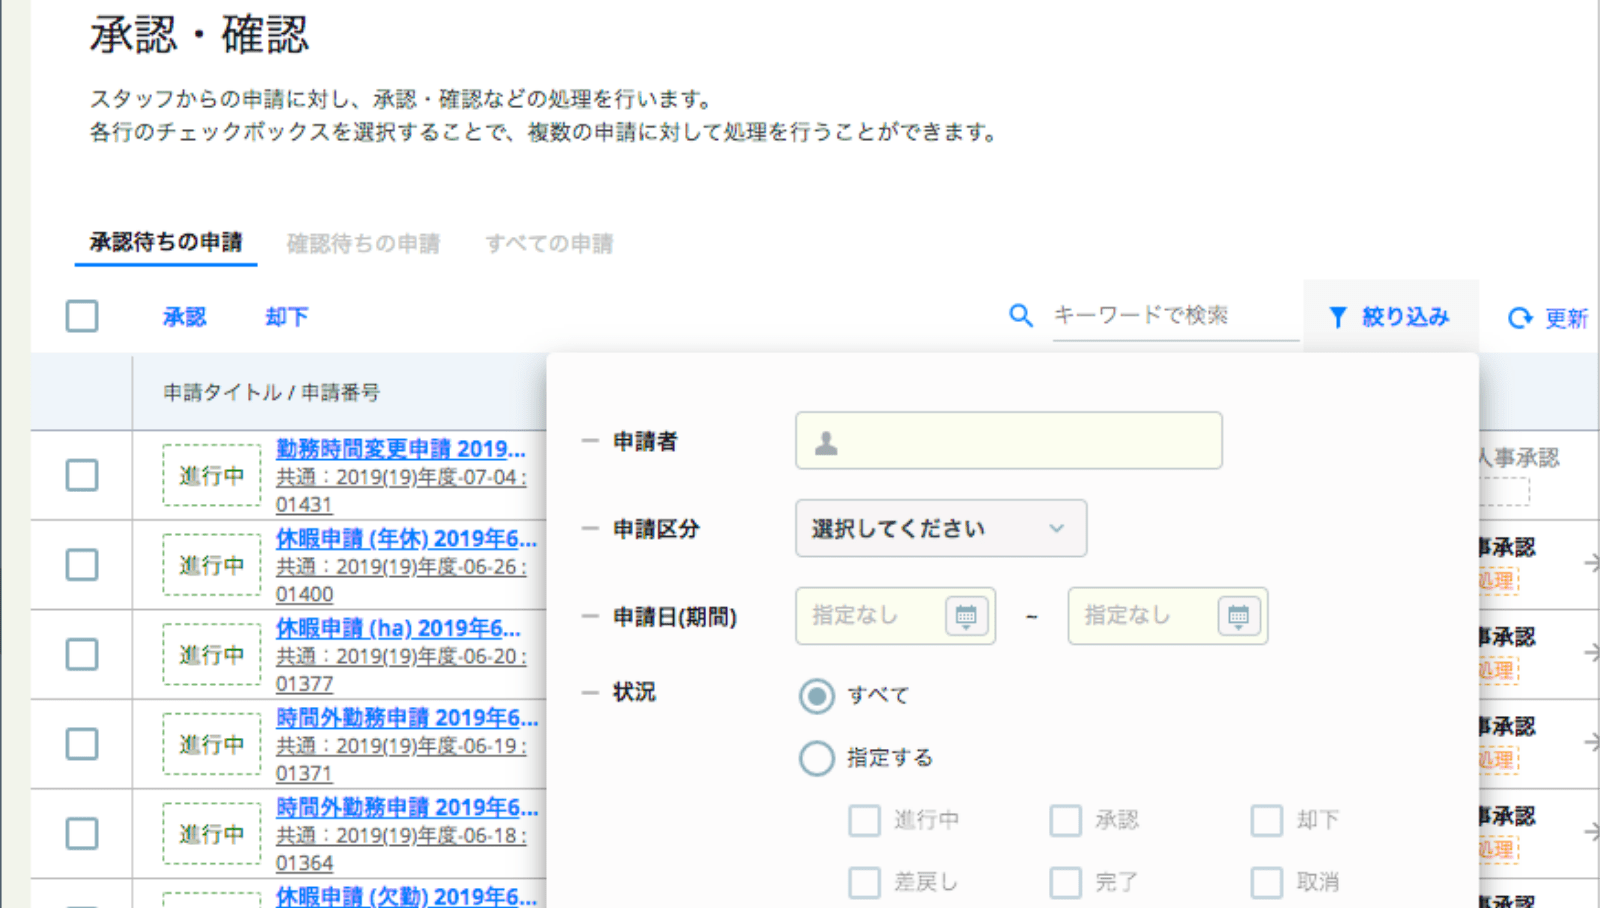 rakumo キンタイ スタッフの承認・確認画面の検索・絞り込み